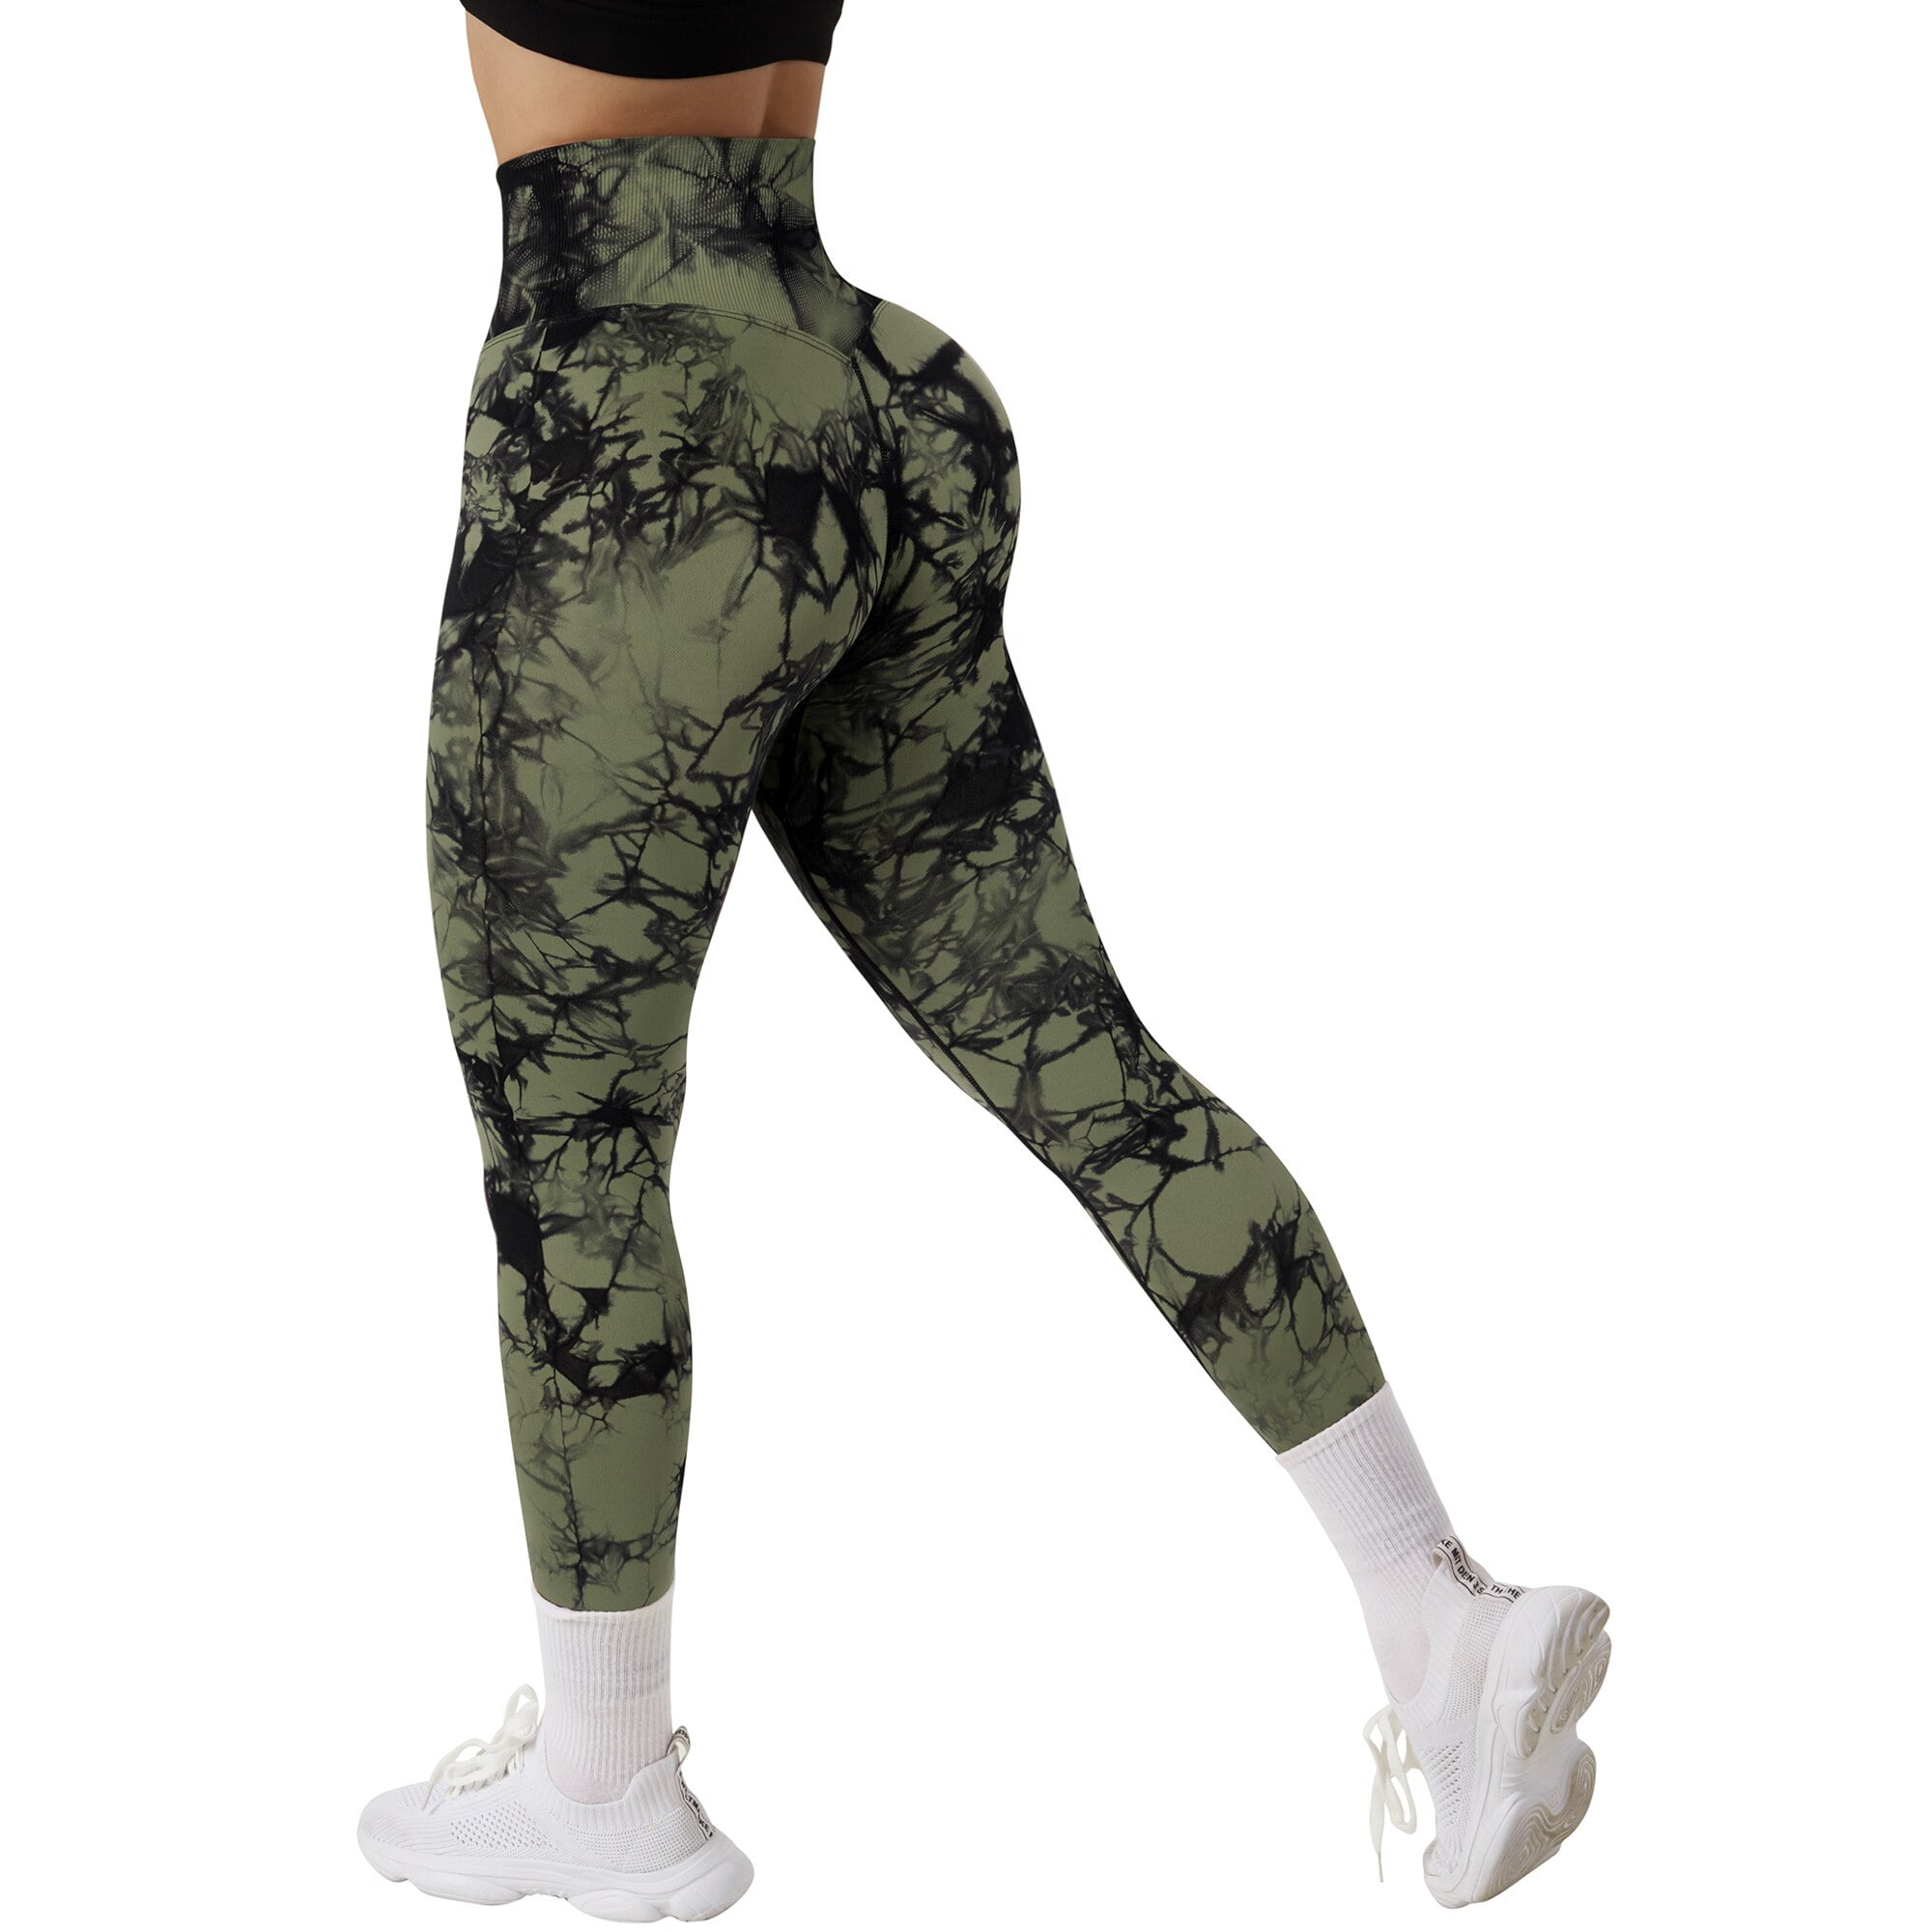 RXRXCOCO Women High Waisted Seamless Butt Lifting Leggings Workout Yoga  Pants 